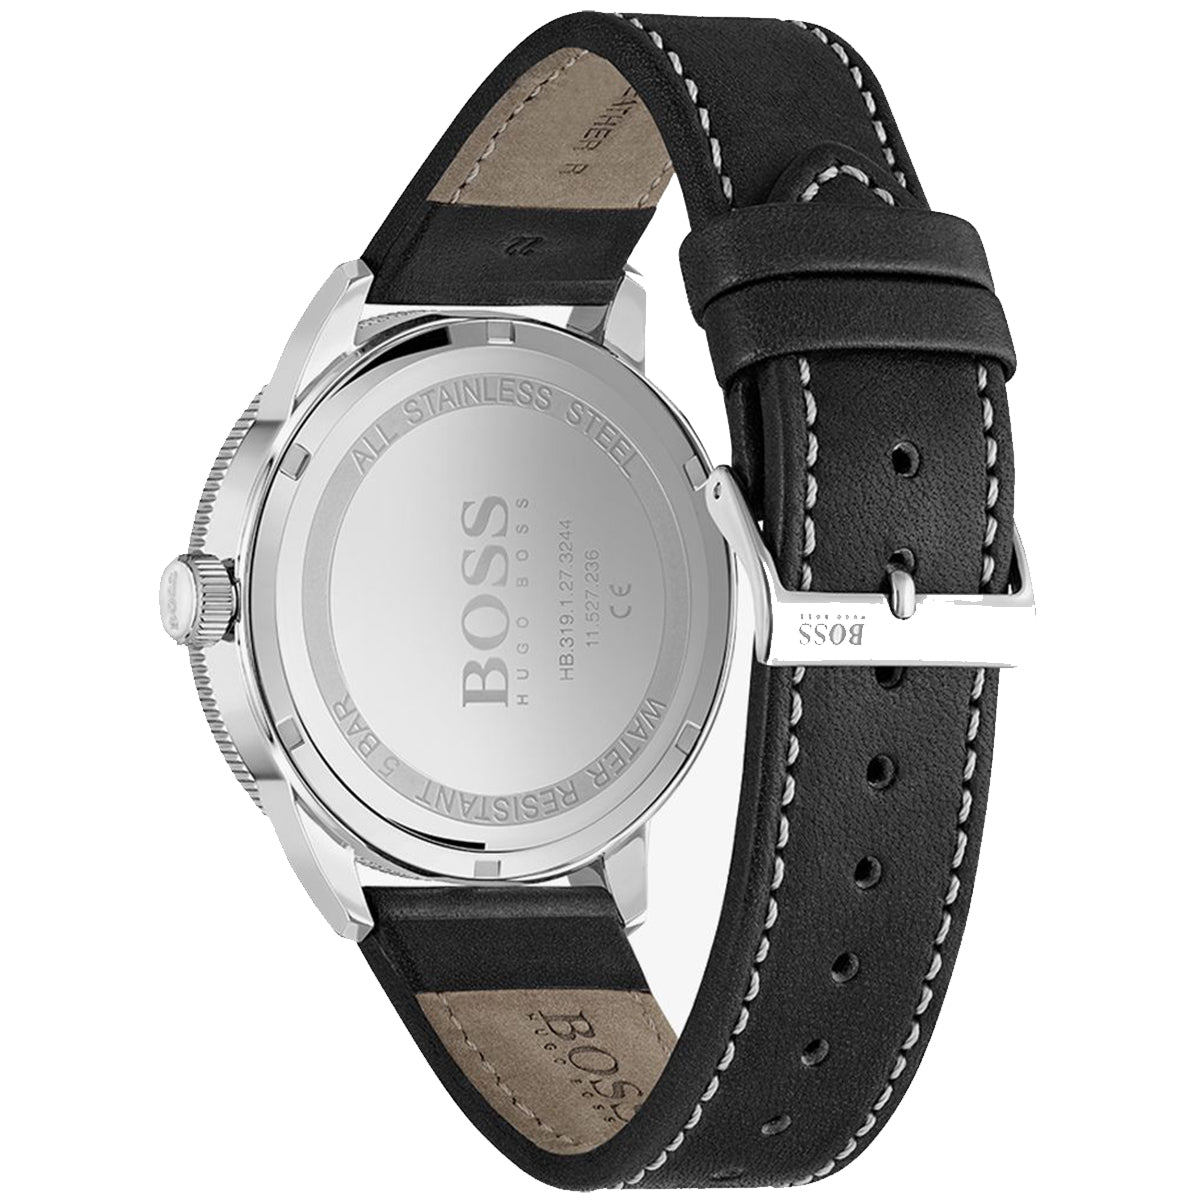 Hugo Boss - Watch and Bracelet Gift Set - HB157.0124